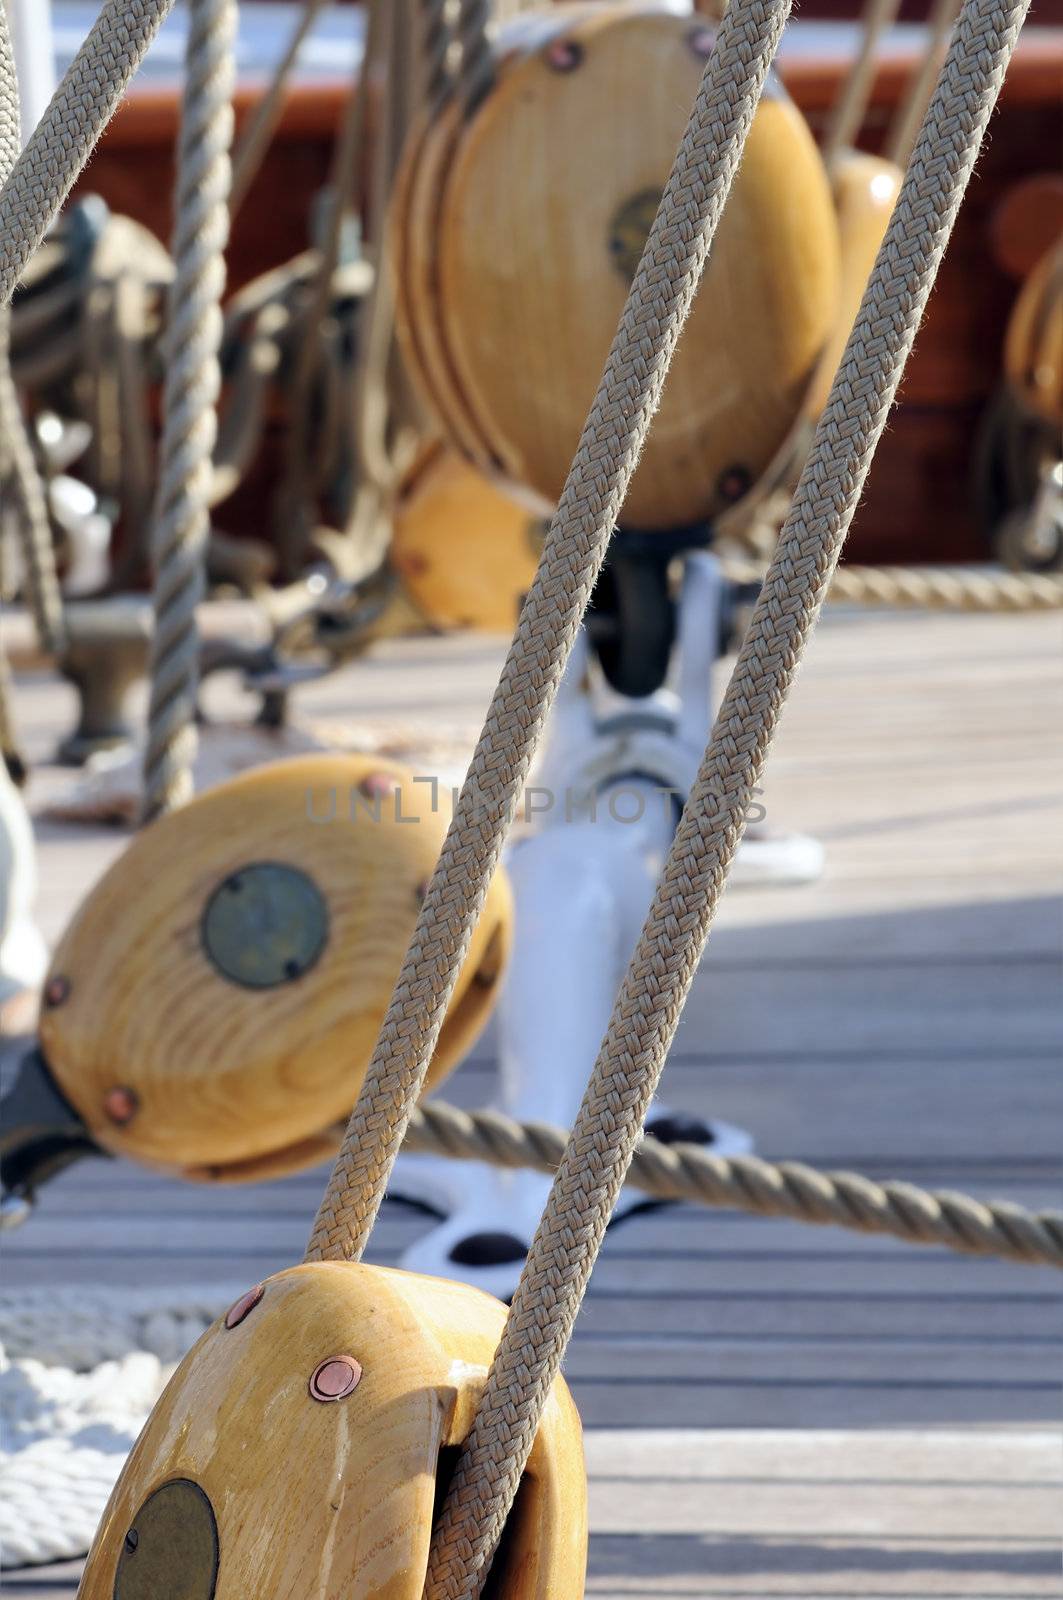 Sailing pulleys and ropes of a vintage sailboat